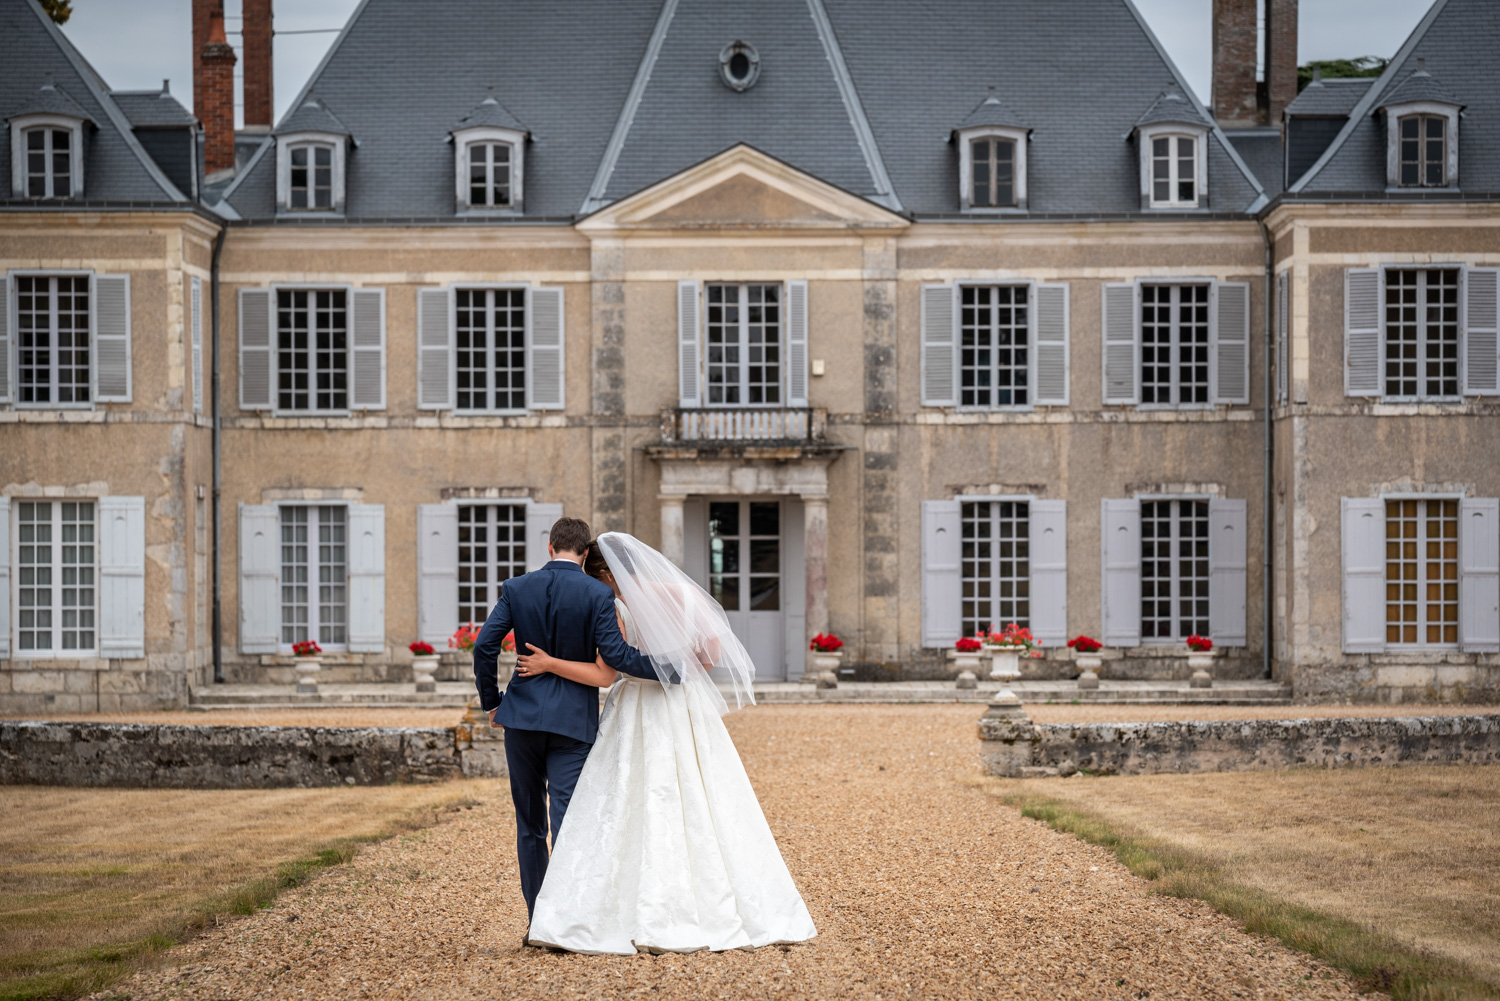 Photographe de mariage - Rouen, Seine Maritime, Normandie